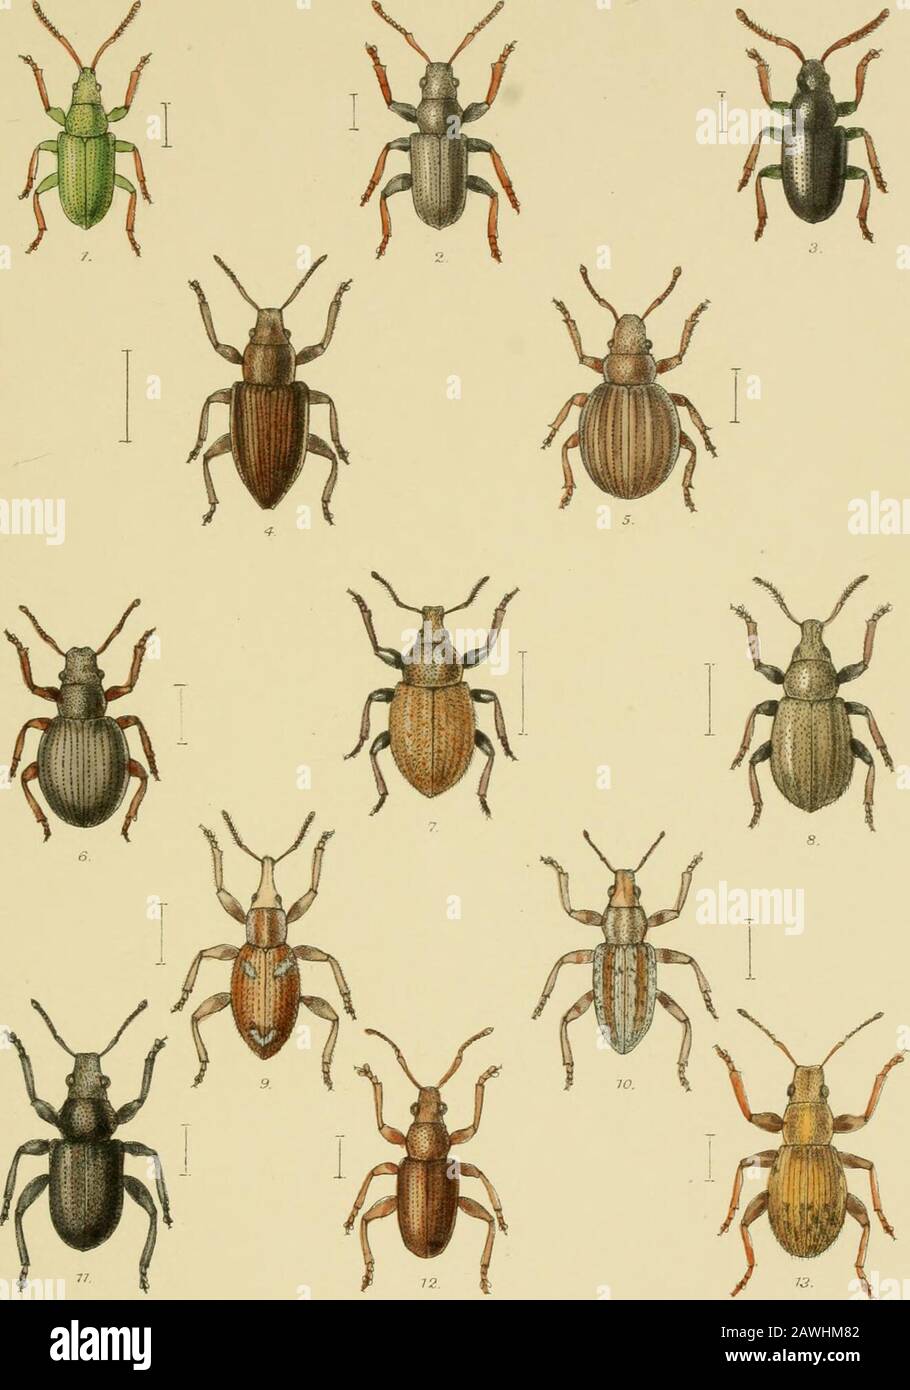 The Coleoptera of the British islandsA descriptive account of the families, genera, and species indigenous to Great Britain and Ireland, with notes as to localities, habitats, etc . R.MorgaTi.,del.-r.lv VmcentBrooks Day & oonjmp. ,.S,eee ;- O? London. ::rrt?^ USA PLATE CLXI. YiG. 1. Phyllobius pouionae, 01. 2. ,, viridiaeris, Laich (uniformis Marsh), var griseus, Fowler. 3. ,, viridicollis, F. 4. Tanymecus palliatus, F. 5. Philopedon (CneorrJmms) geminatus, F. 6. Atactogenus (CneorrJiinug) exaratus, Marsli. 7. Barynotus obscurus, F. 8. ,, elevatus, Marsli {vicerens auct, nee F.). 9. Alophus t Stock Photo